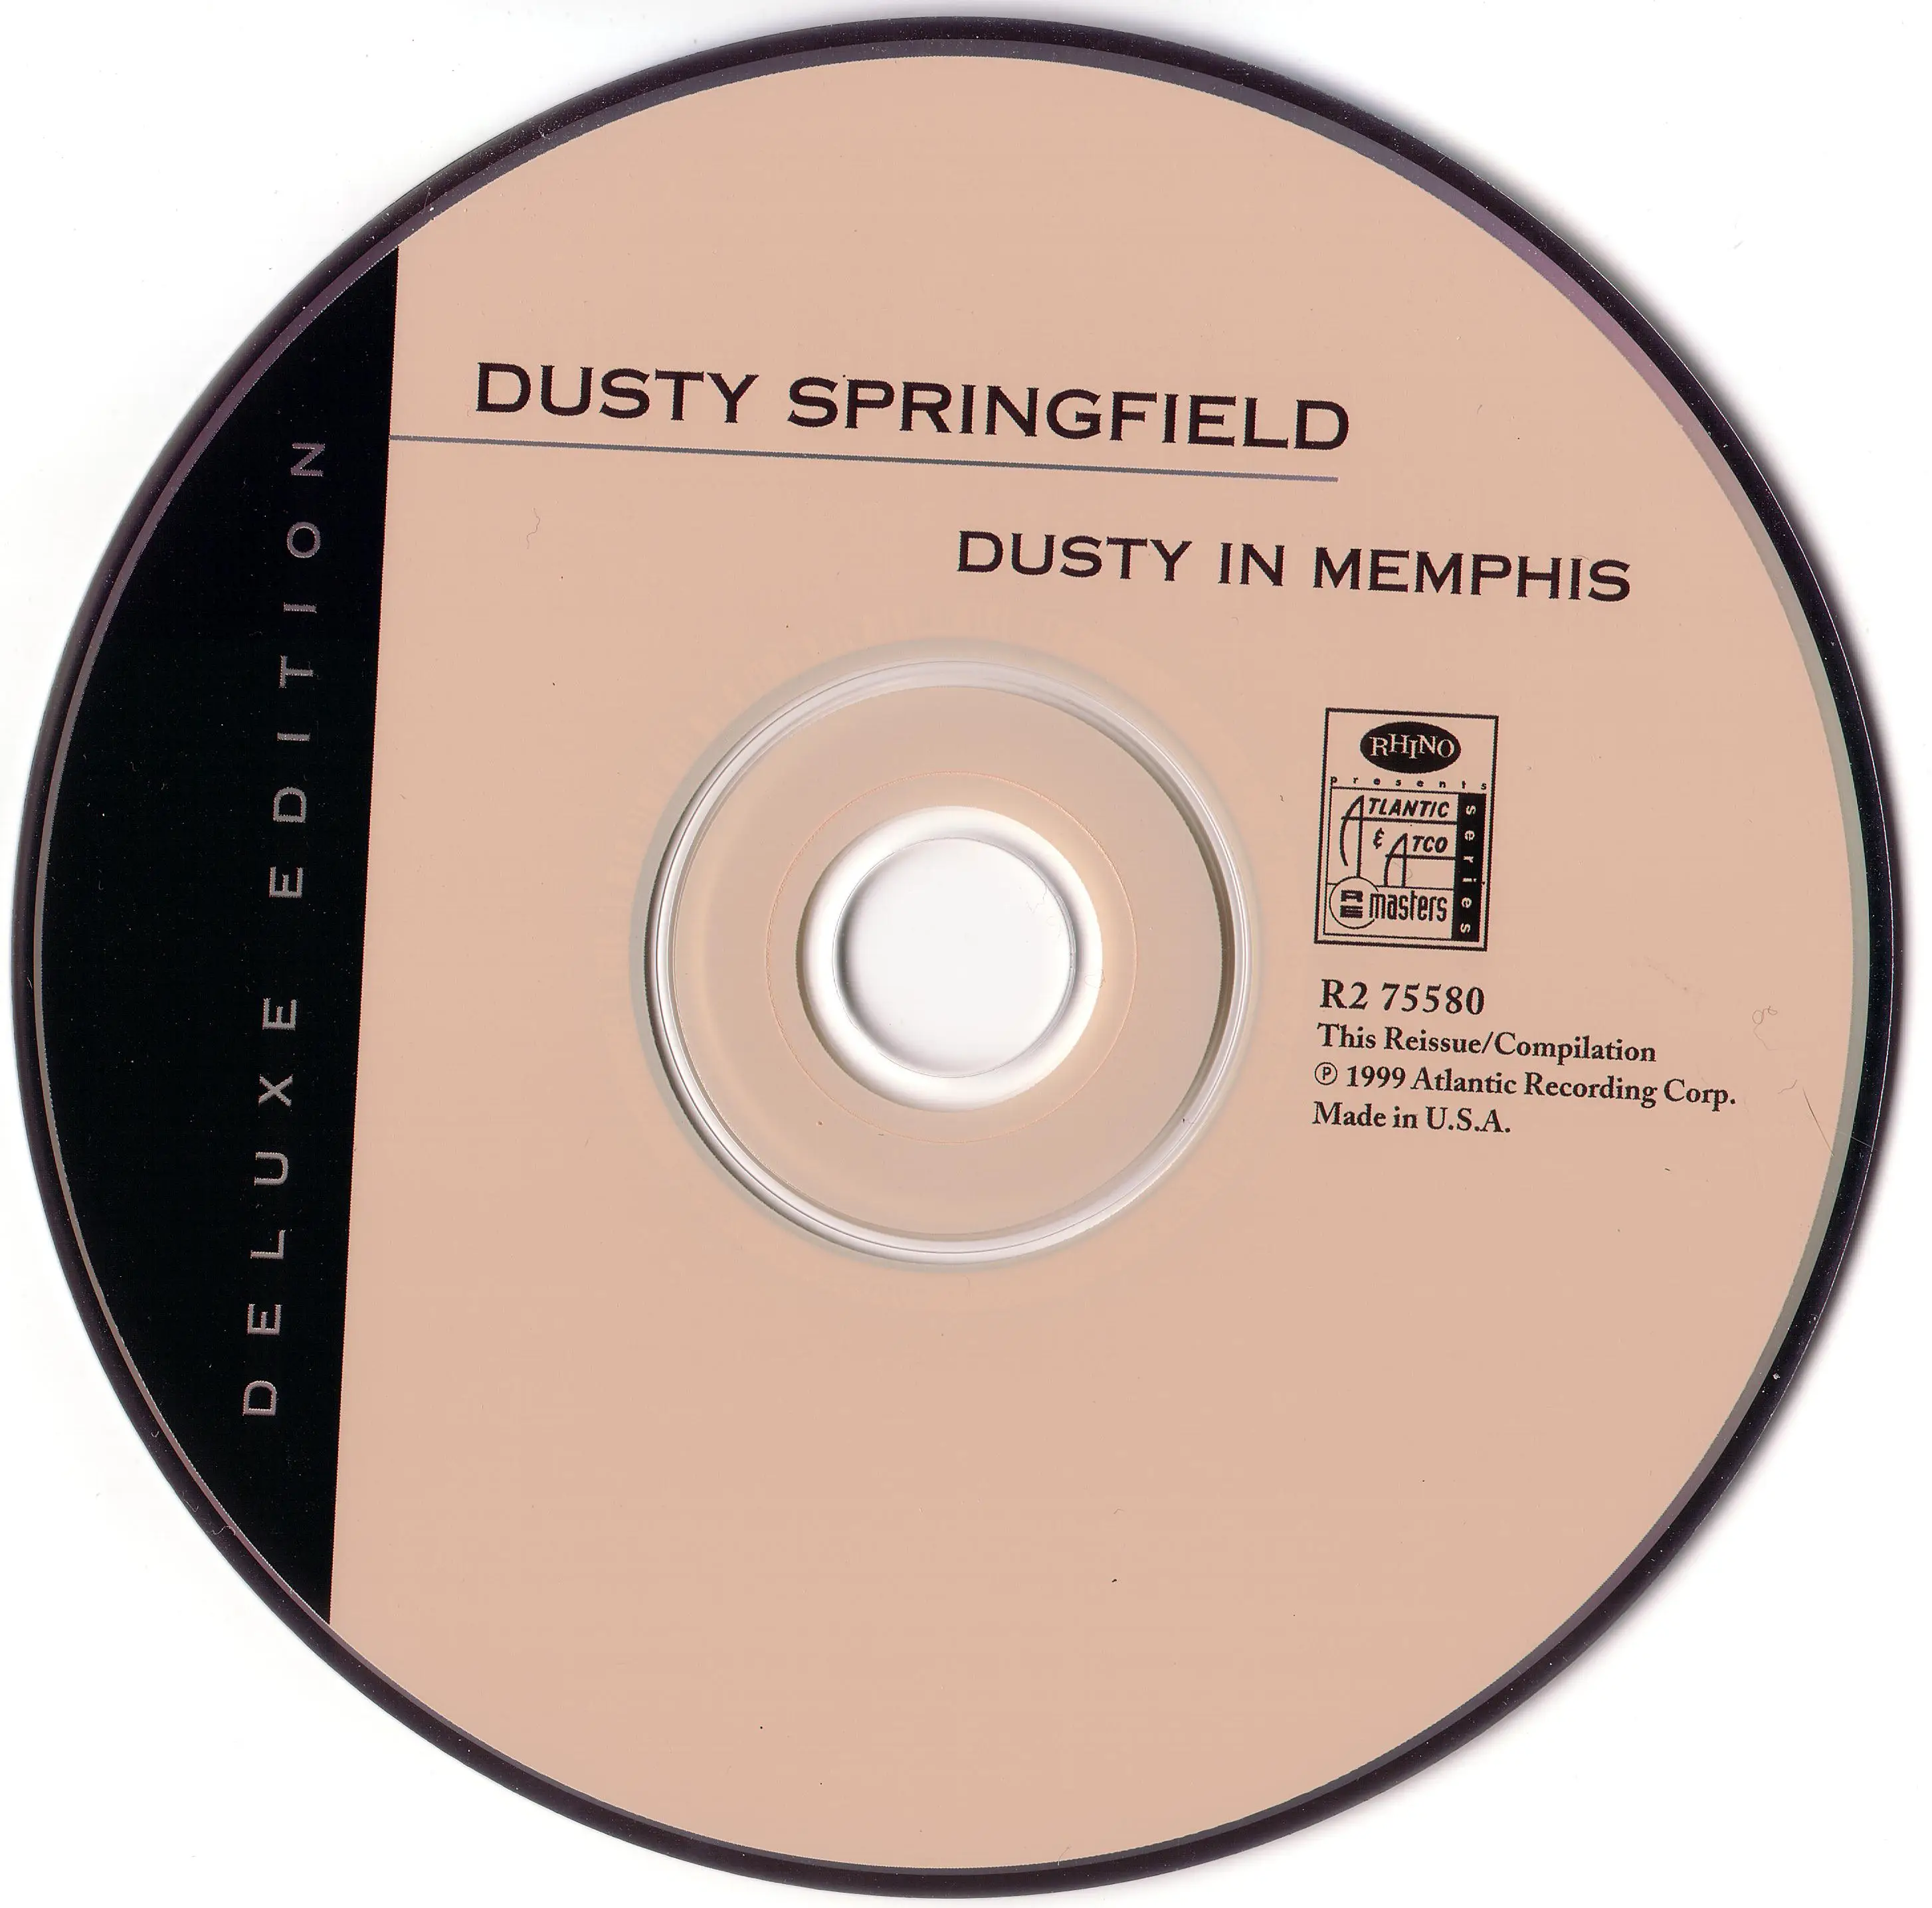 Dusty перевод. Dusty in Memphis Дасти Спрингфилд. Dusty Springfield Dusty in Memphis. Dusty in Memphis LP. Dusty Springfield в молодости.